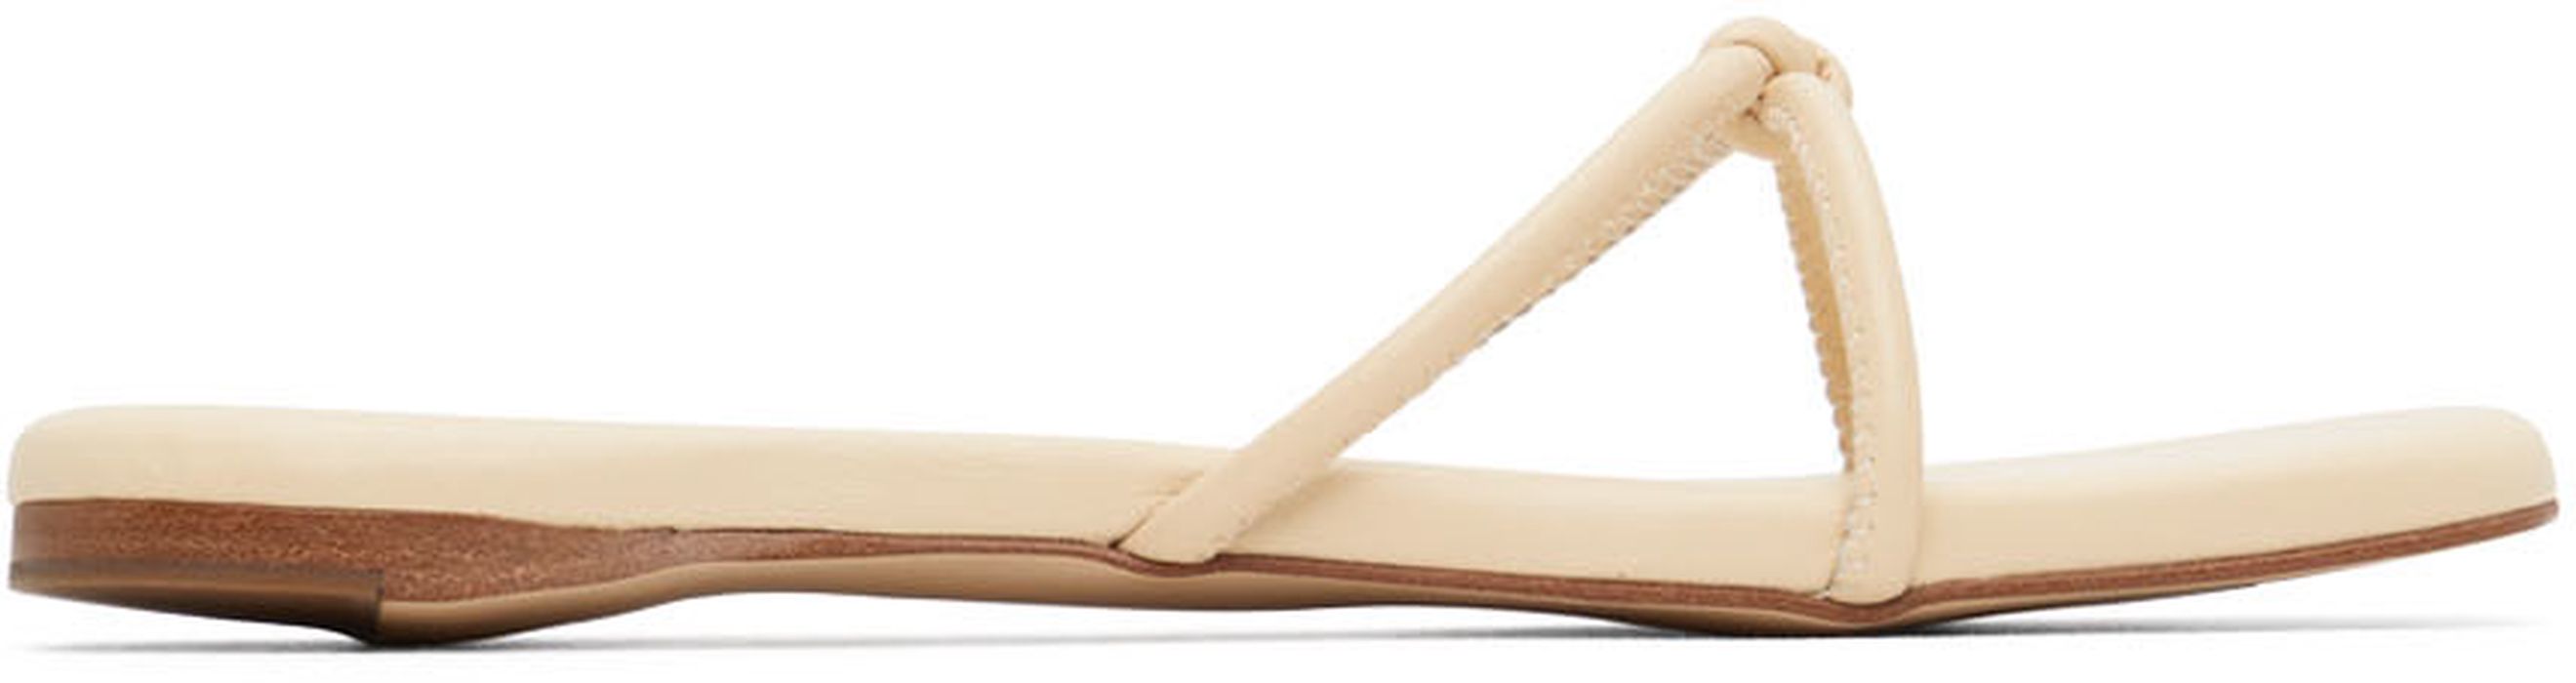 LÉMÉLS Off-White Rope Cross Sandals